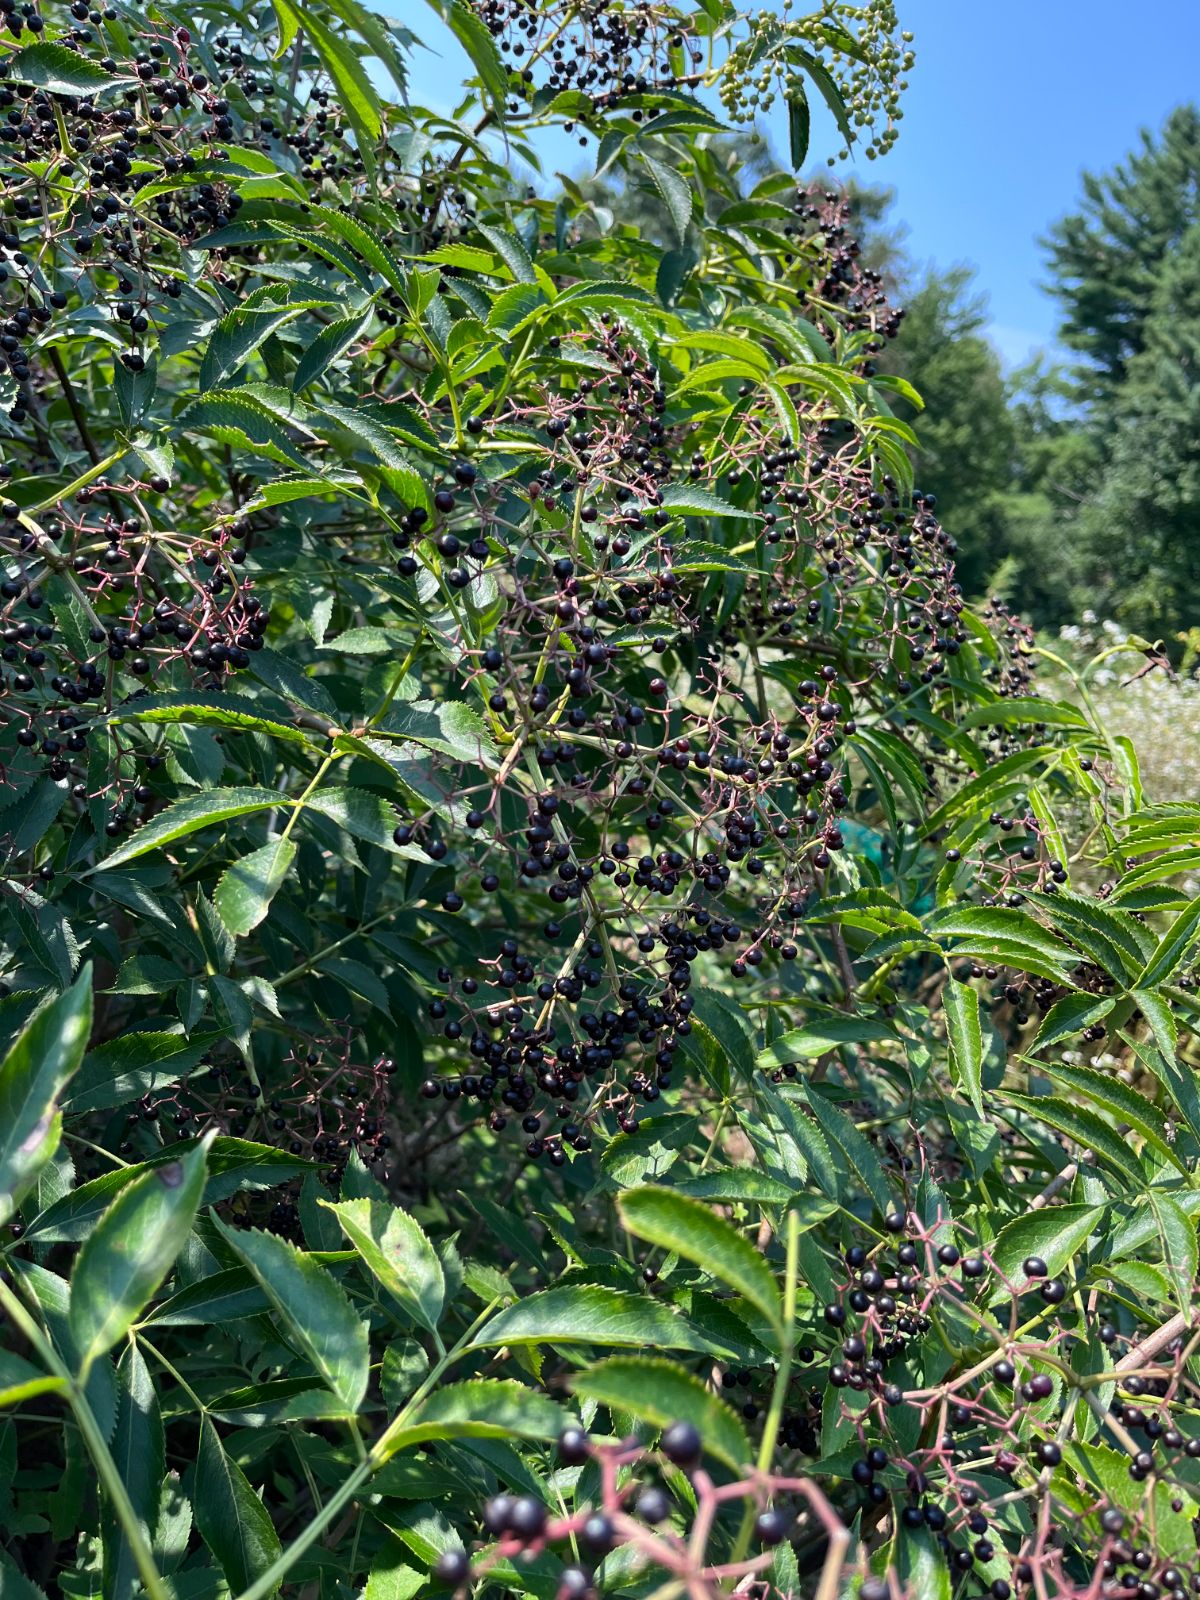 An elderberry bush with uniformly ripe berries